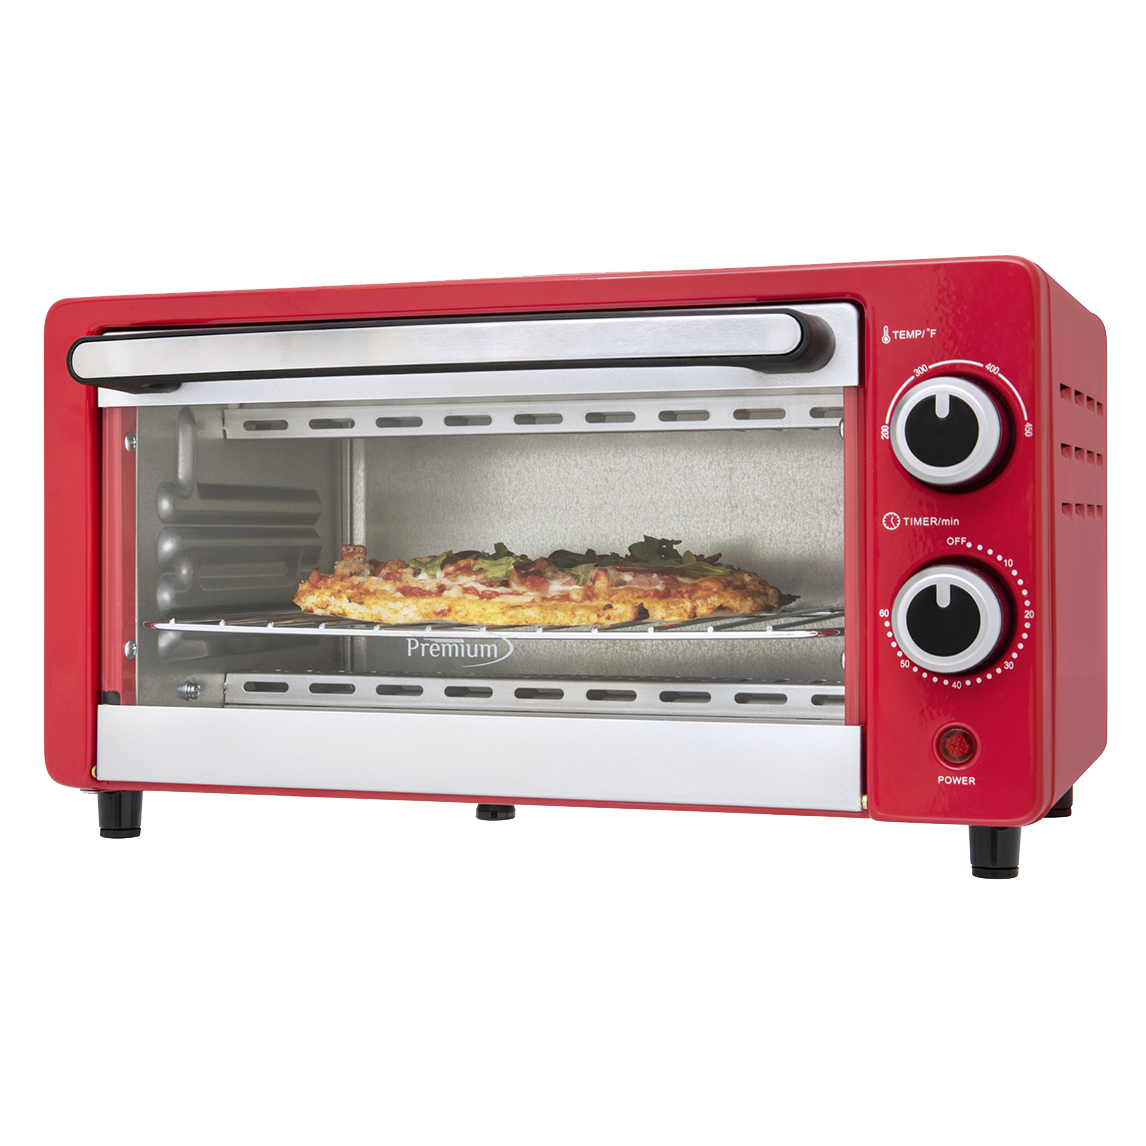 Premium 4-Slice Toaster Broil Oven 8" Pizza Bake. Elegad Red